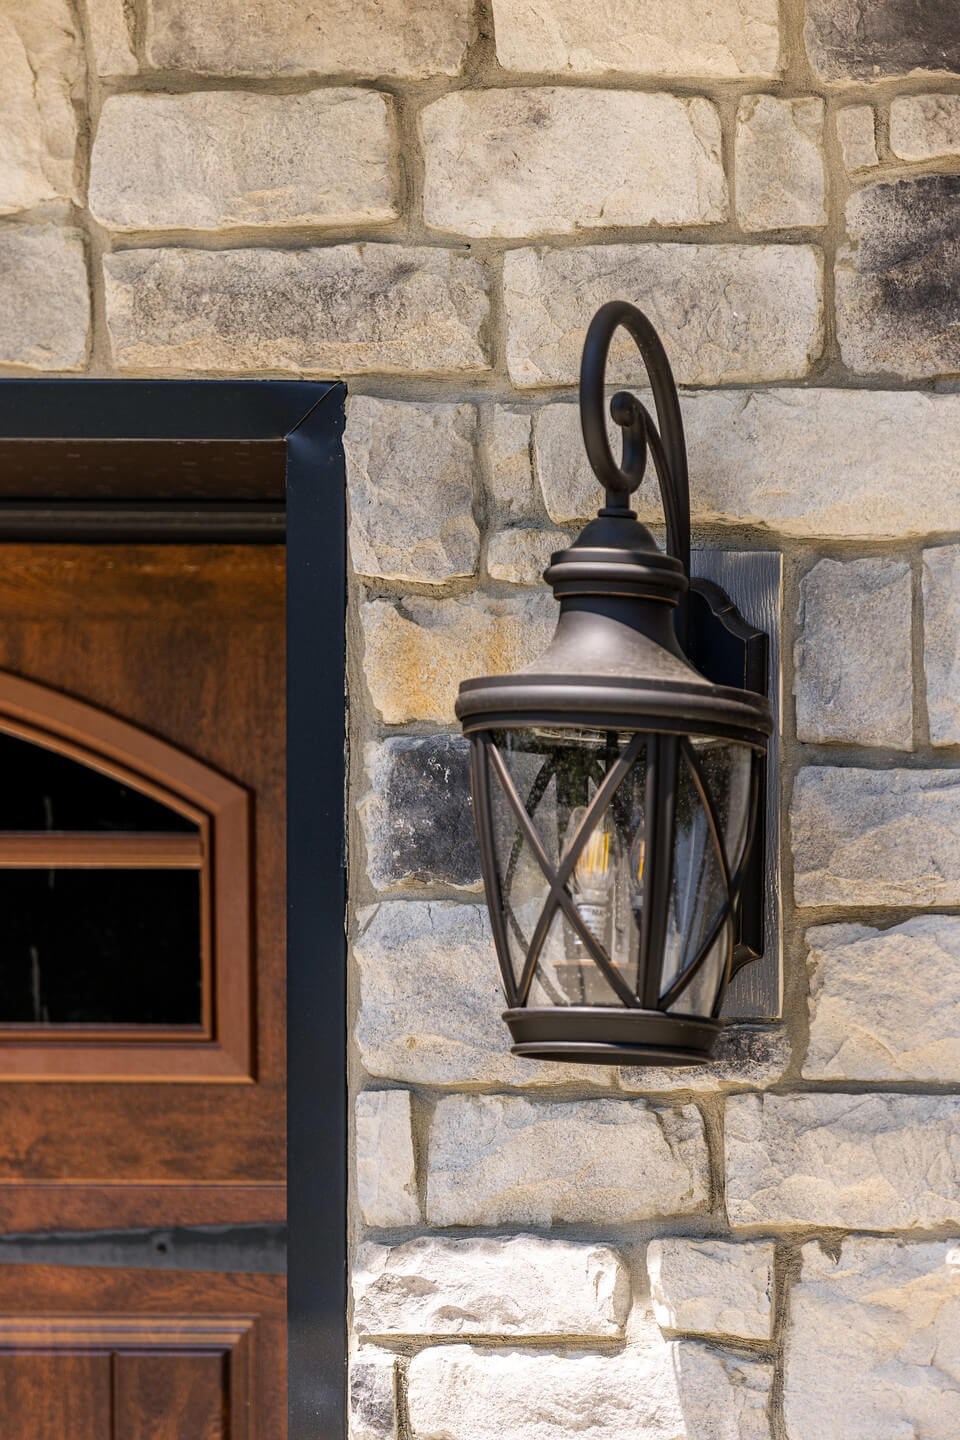 Glen-Gery | Limestone Kentucky Gray building stone veneer on exterior of home garage with coach light